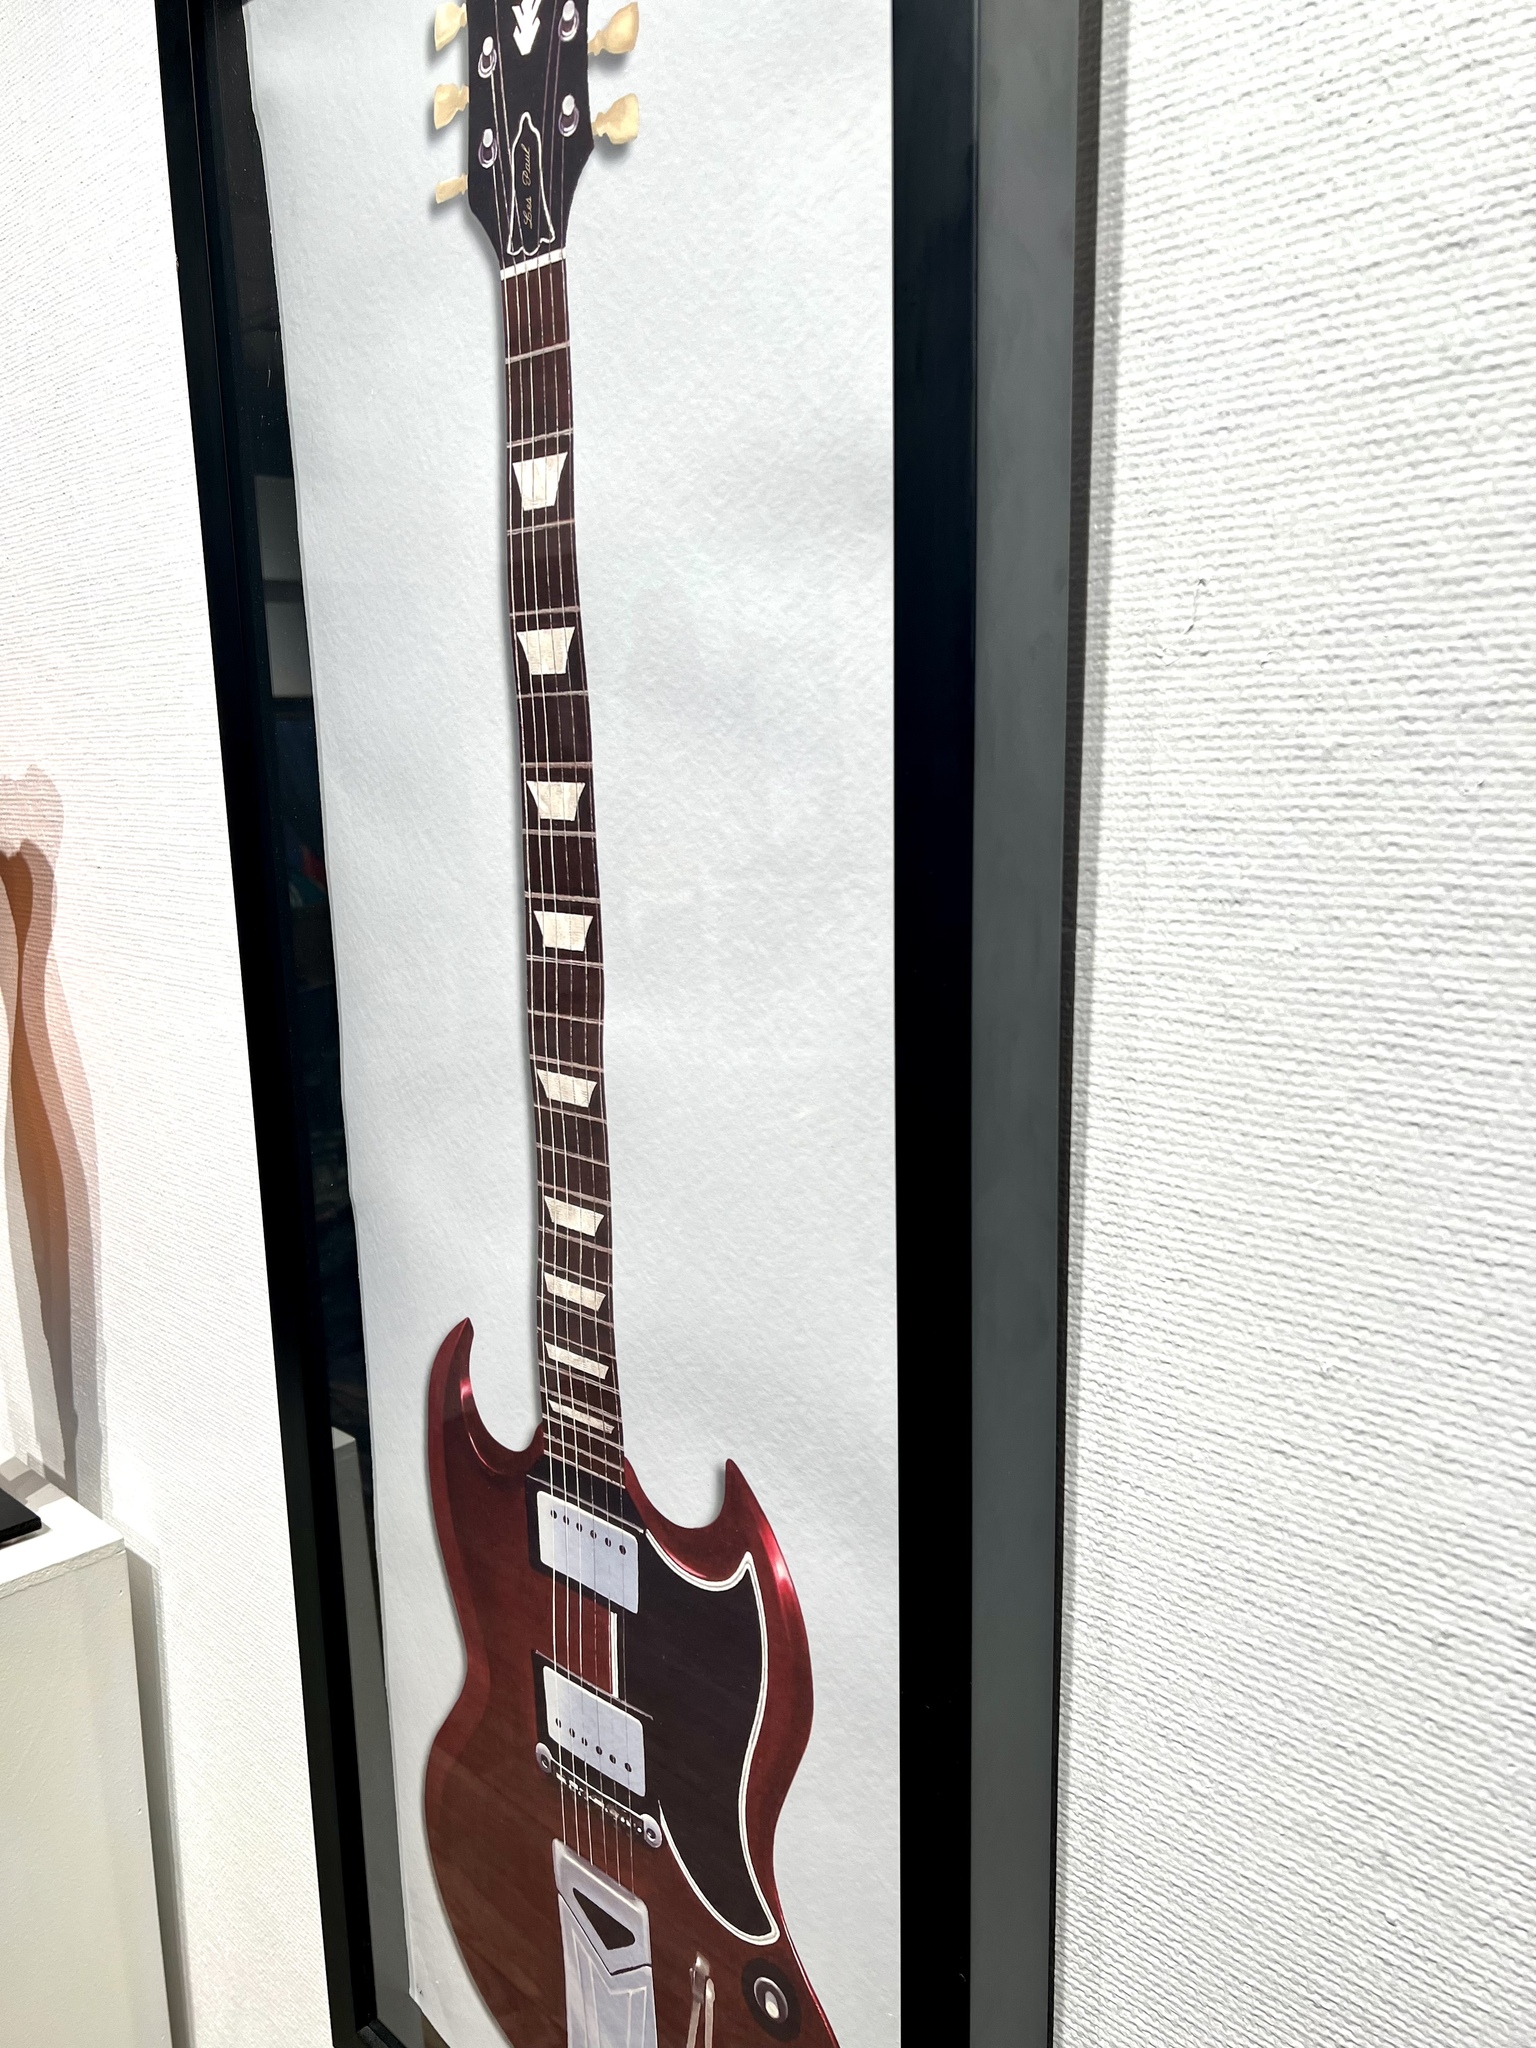 "The Gibson Guitar" Litografi av Thomas Hafström, Inramat 47x118 cm